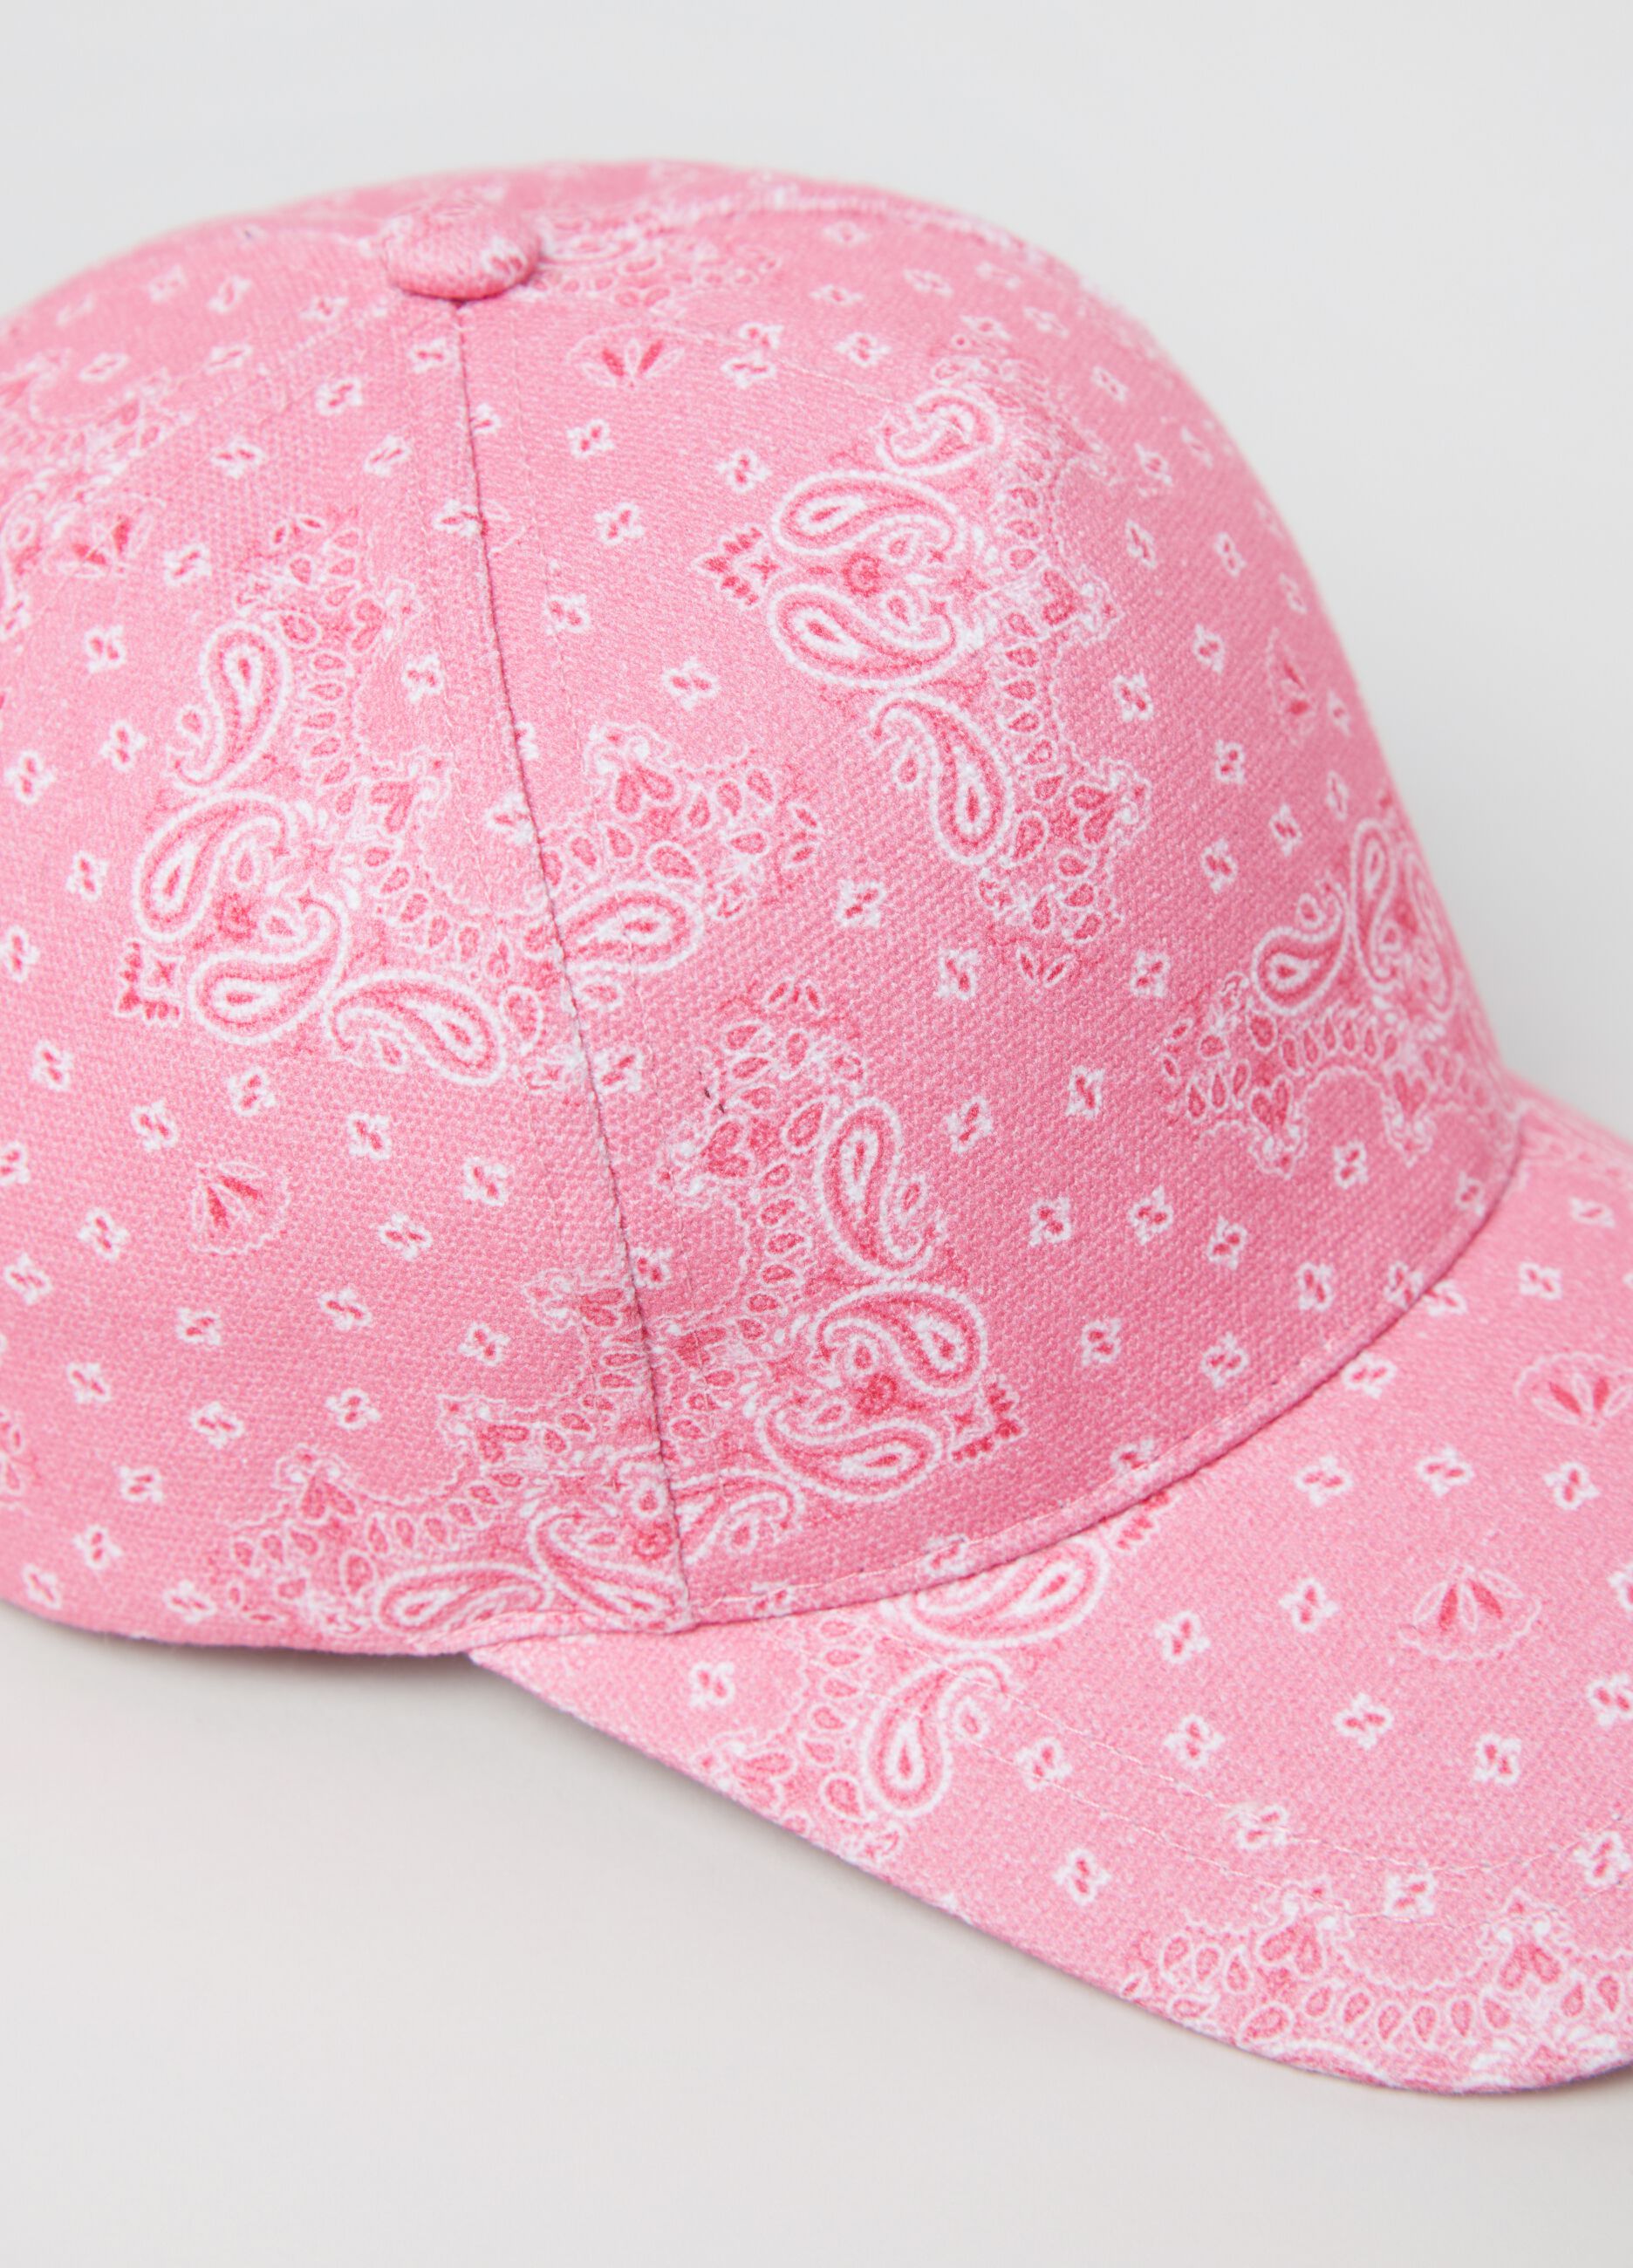 Baseball cap with paisley print